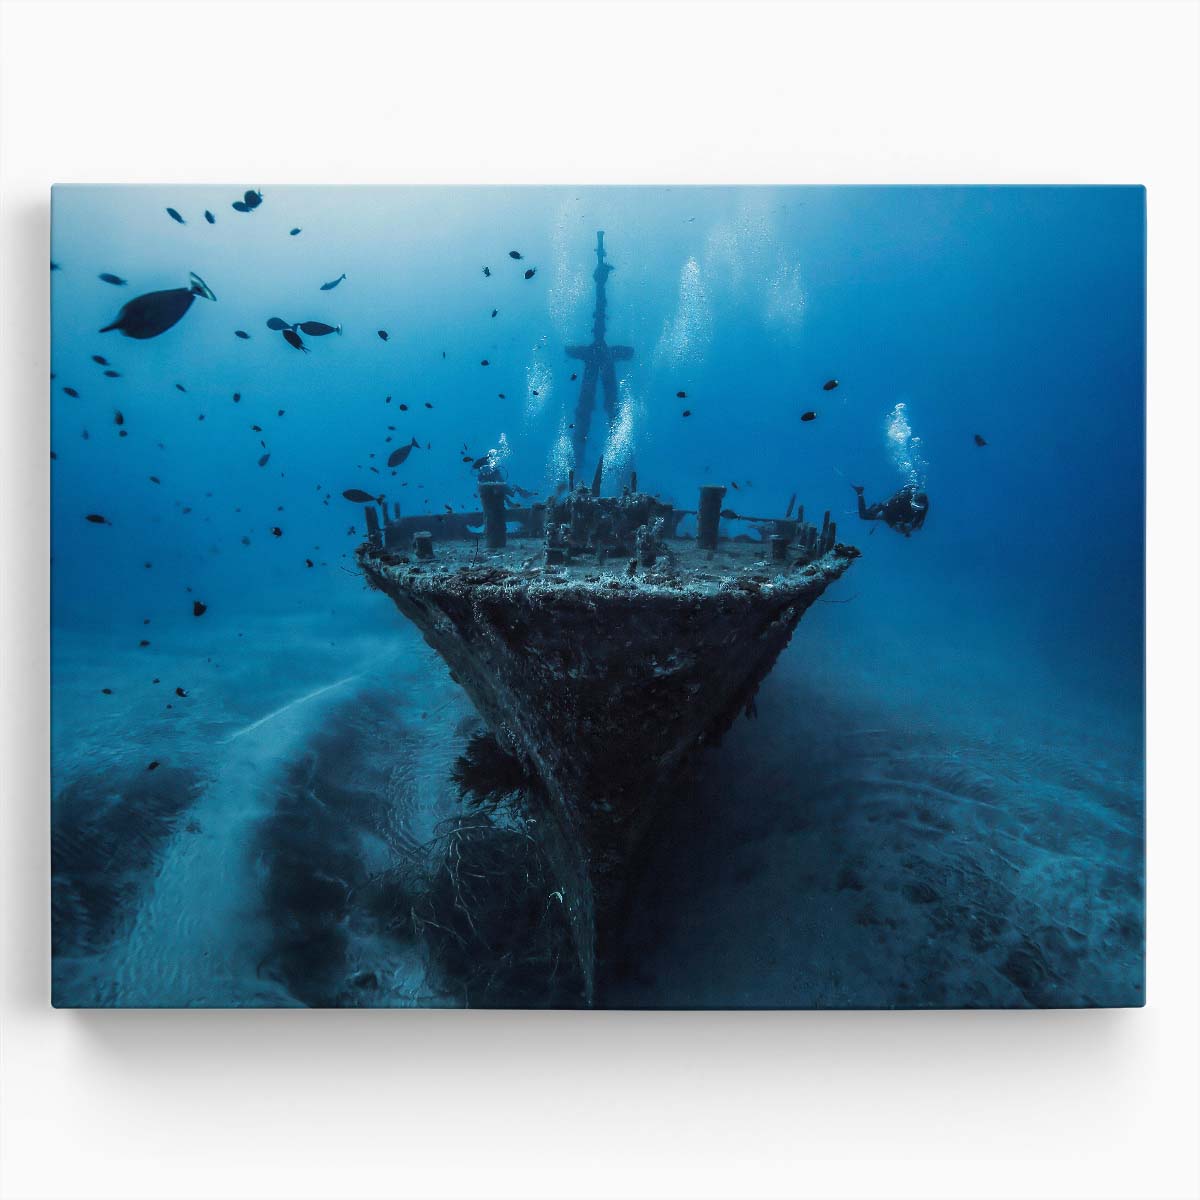 Sunken Shipwreck Adventure Deep Ocean Wall Art by Luxuriance Designs. Made in USA.